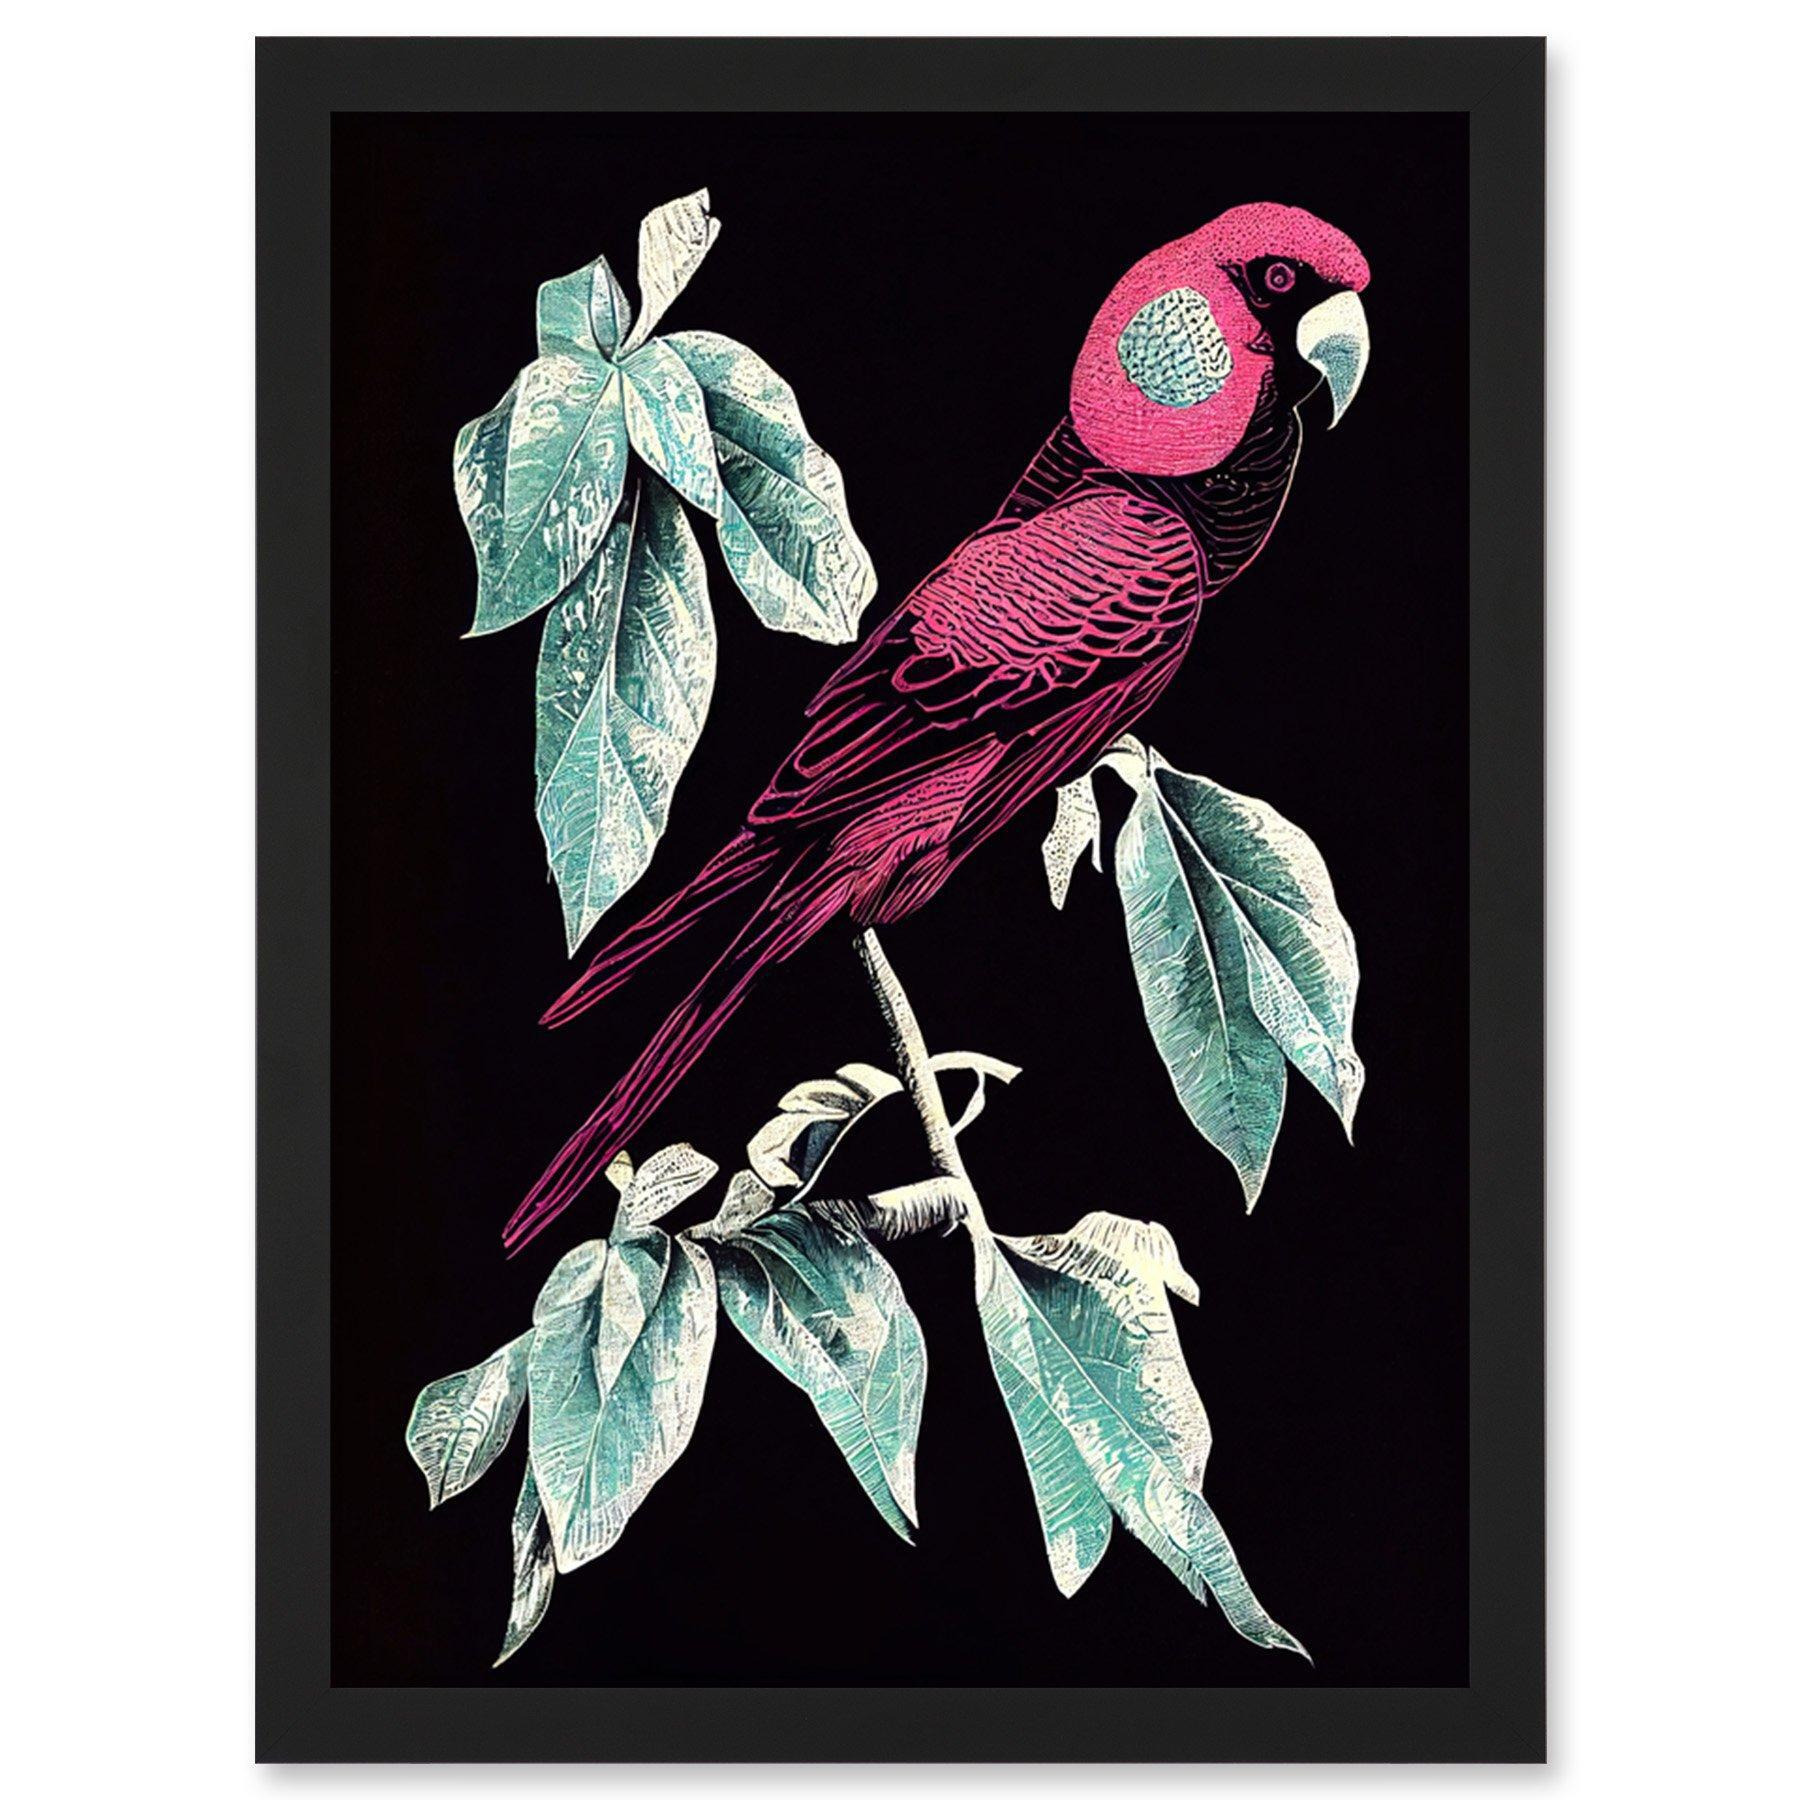 Coral Parrot On Tree Branch Silver Linocut Illustration Modern Vibrant Artwork Framed Wall Art Print A4 - image 1